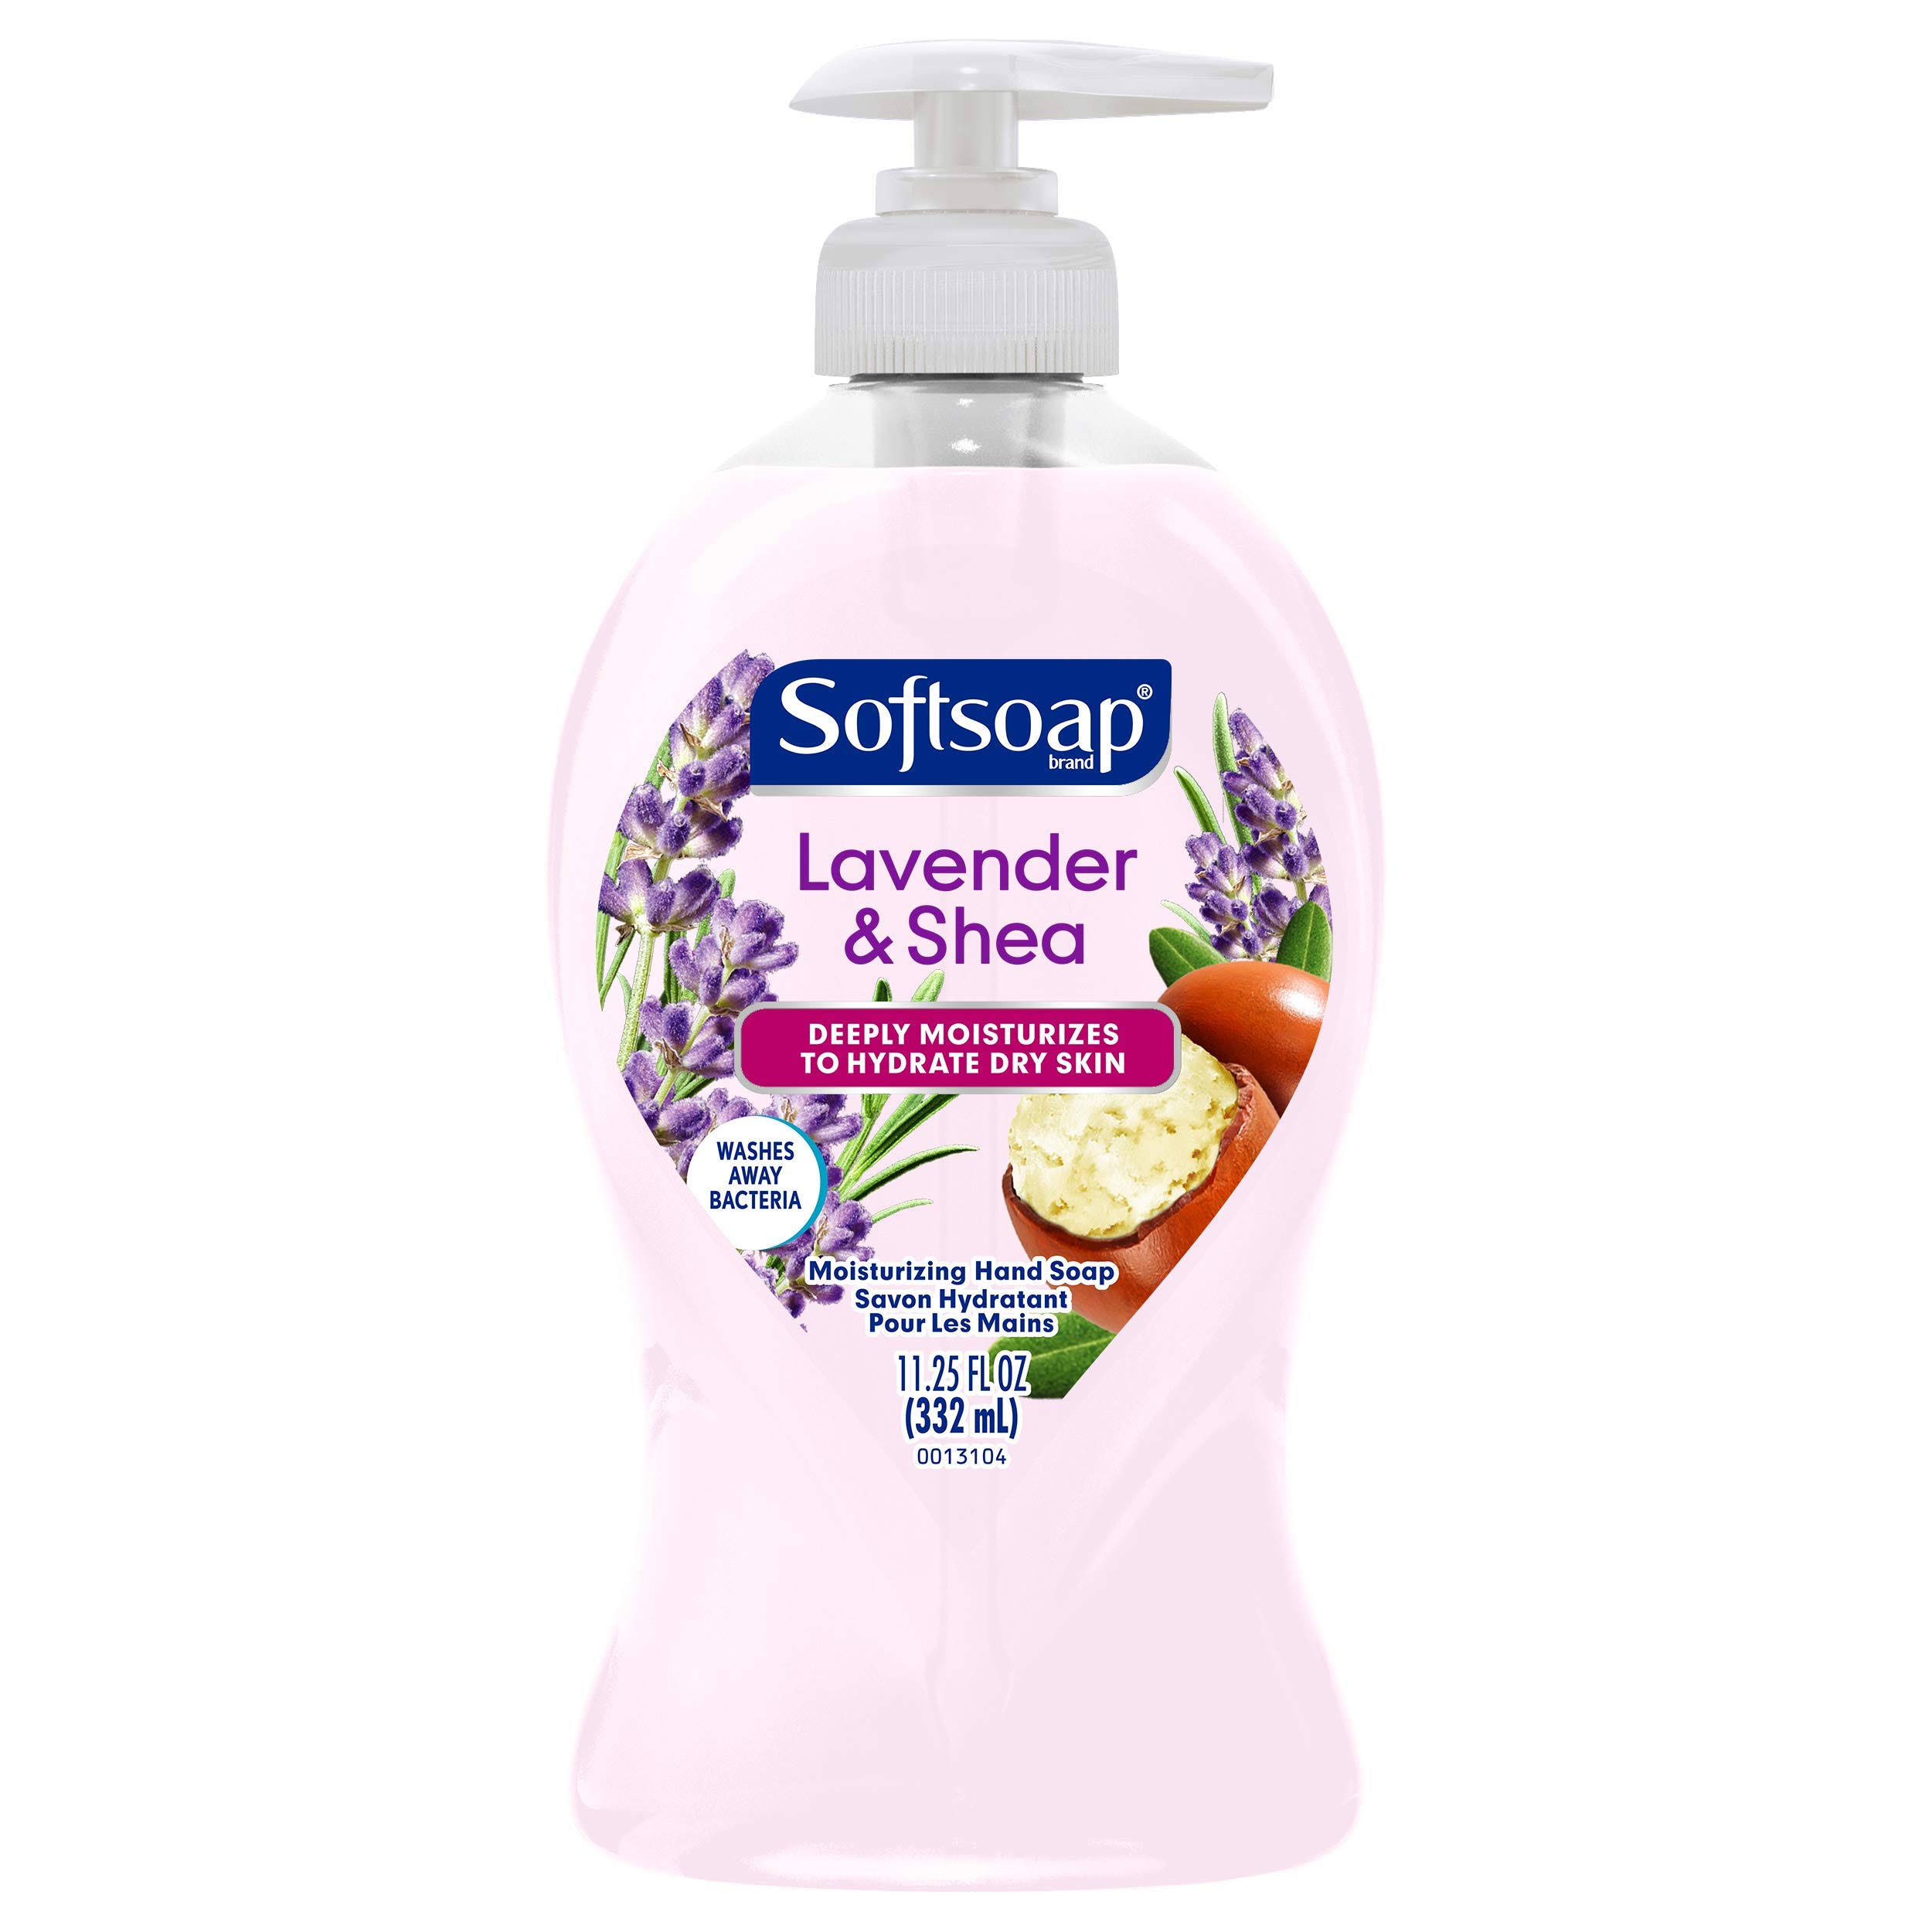 Softsoap deeply moisturizing liquid hand soap, lavender & shea butter, 11.25 oz